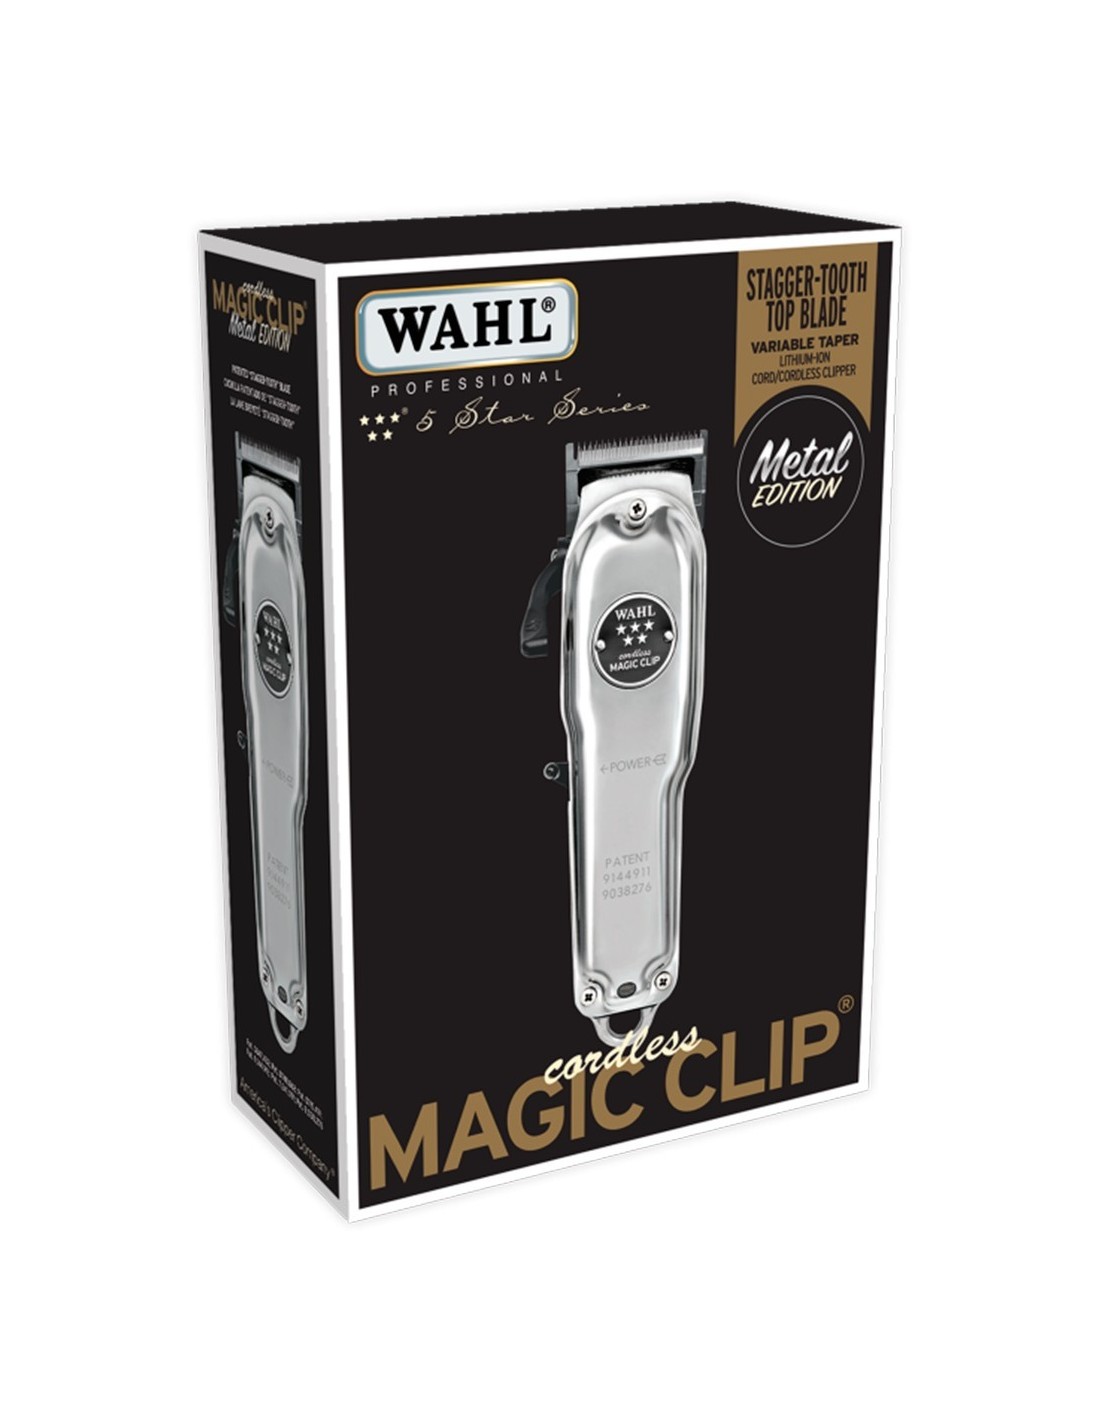 wahl cordless magic clip metal edition